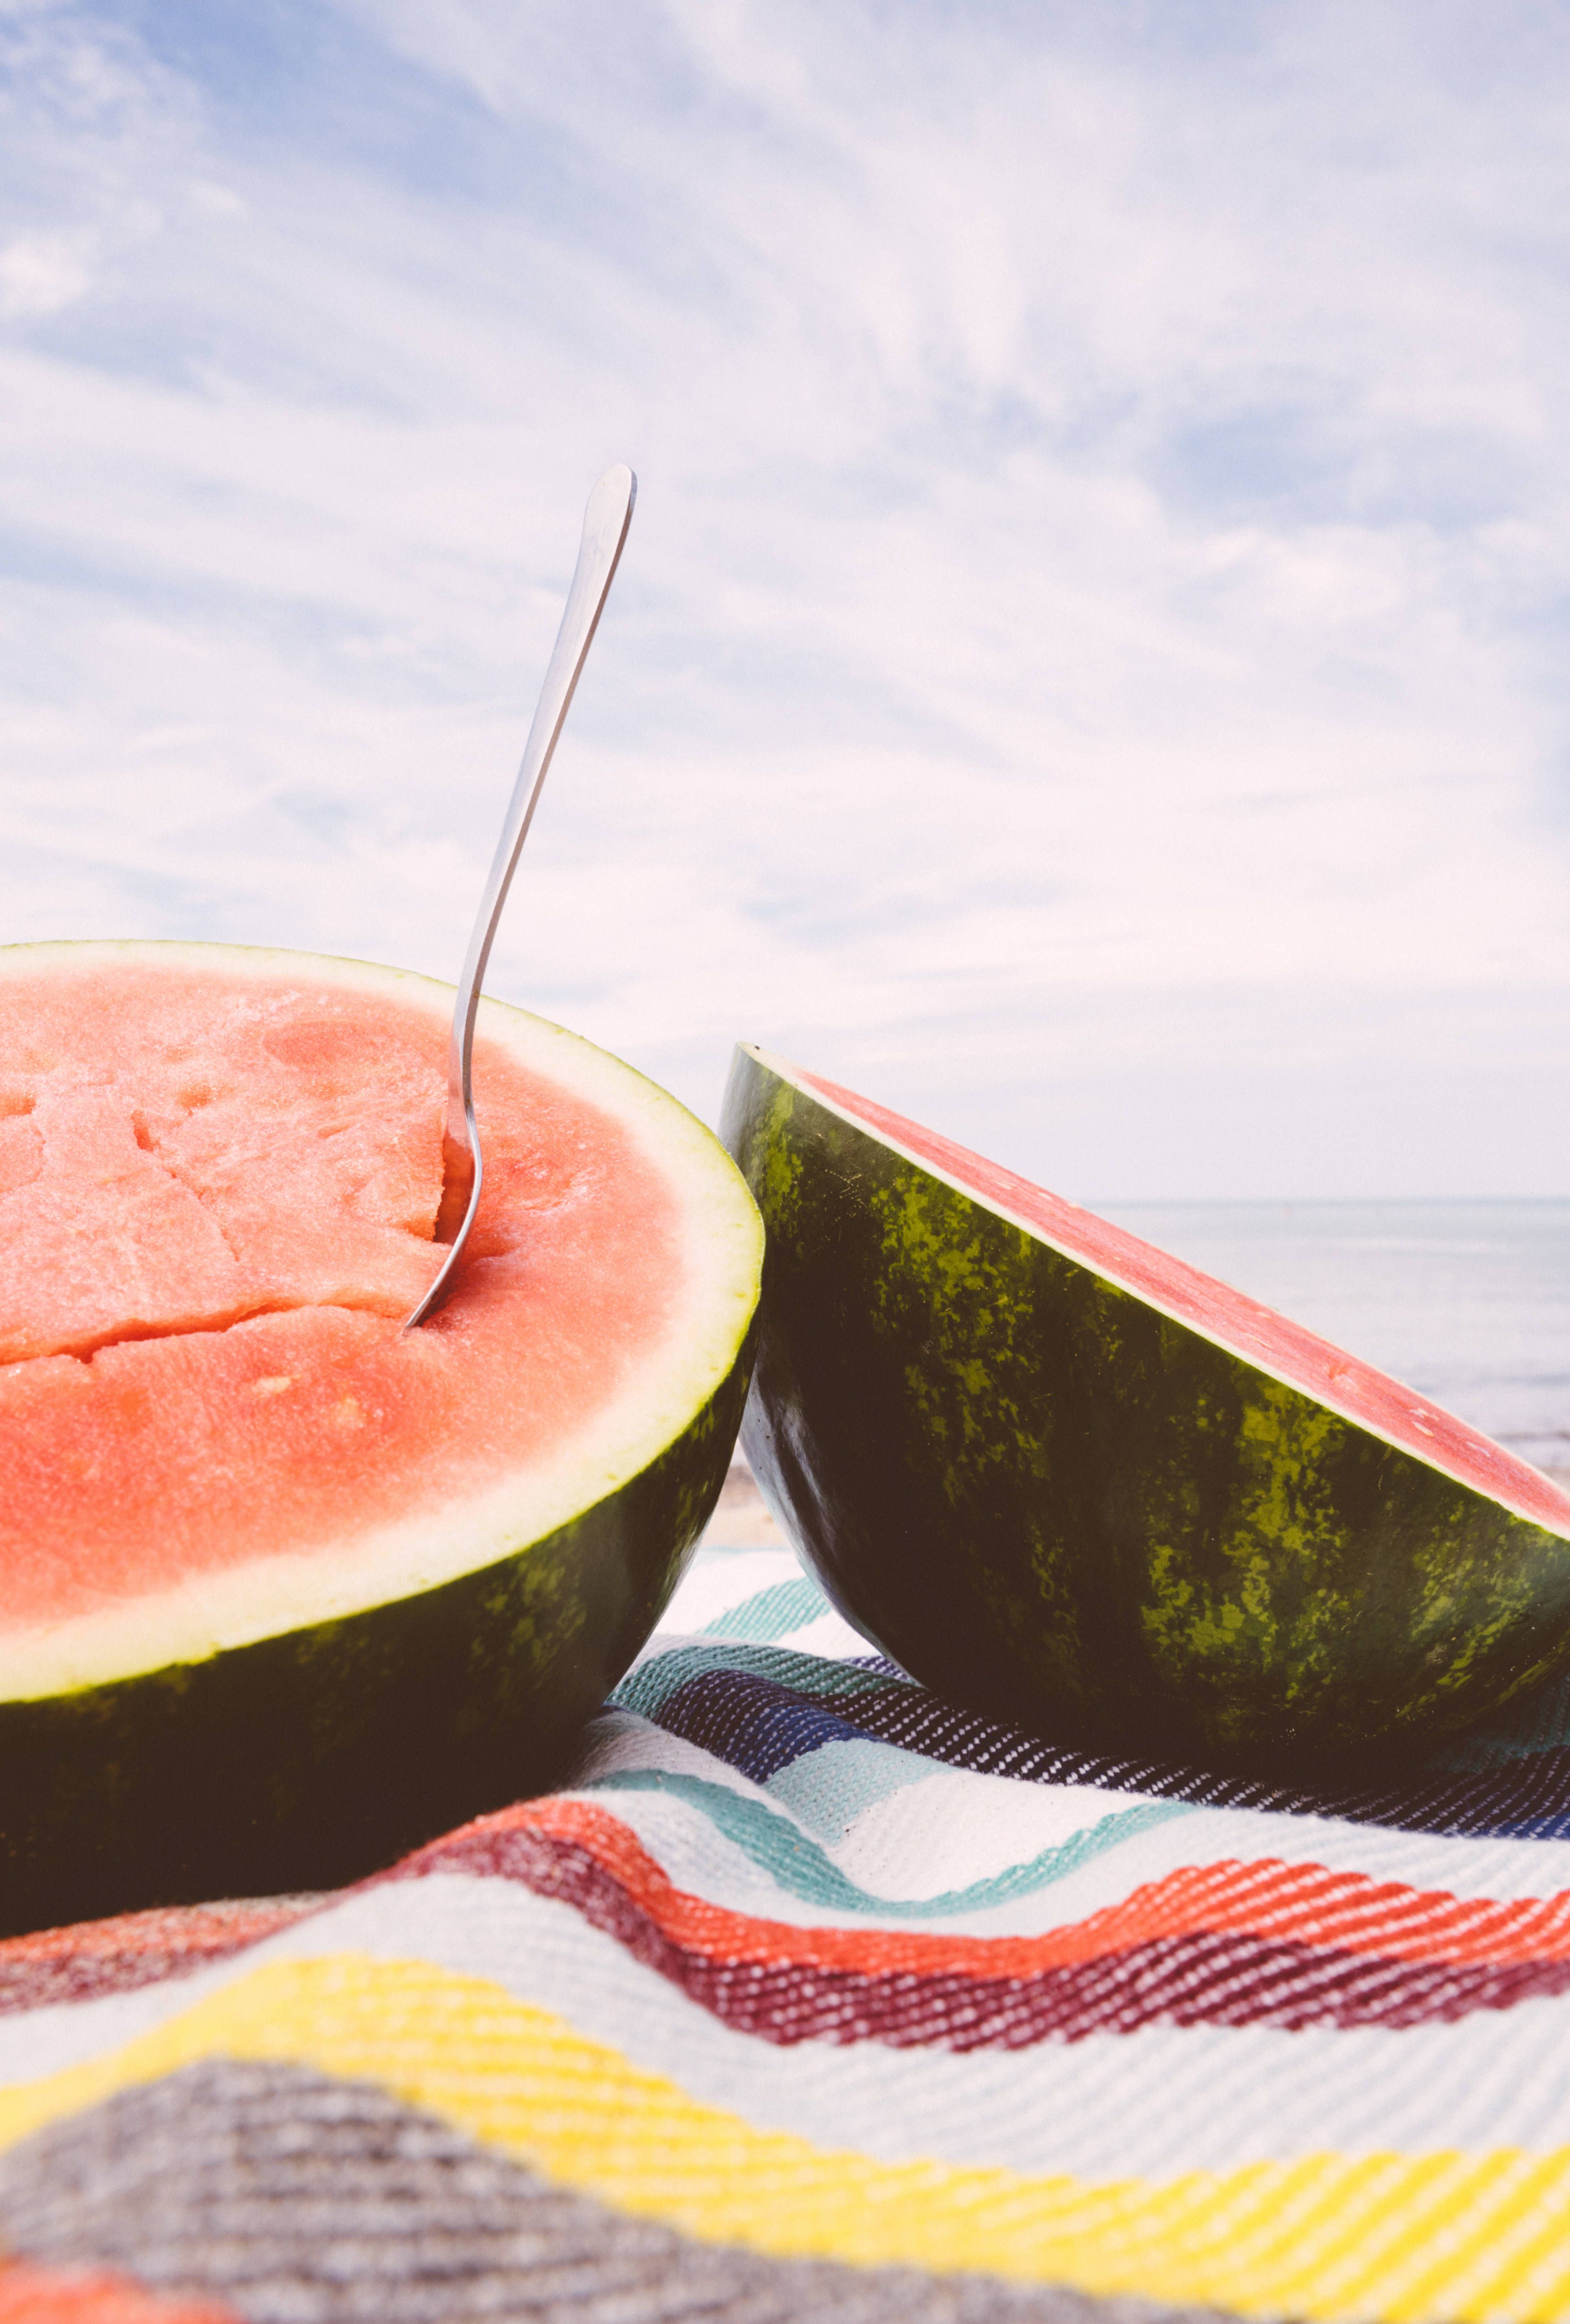 Download Watermelons In Summer Wallpaper